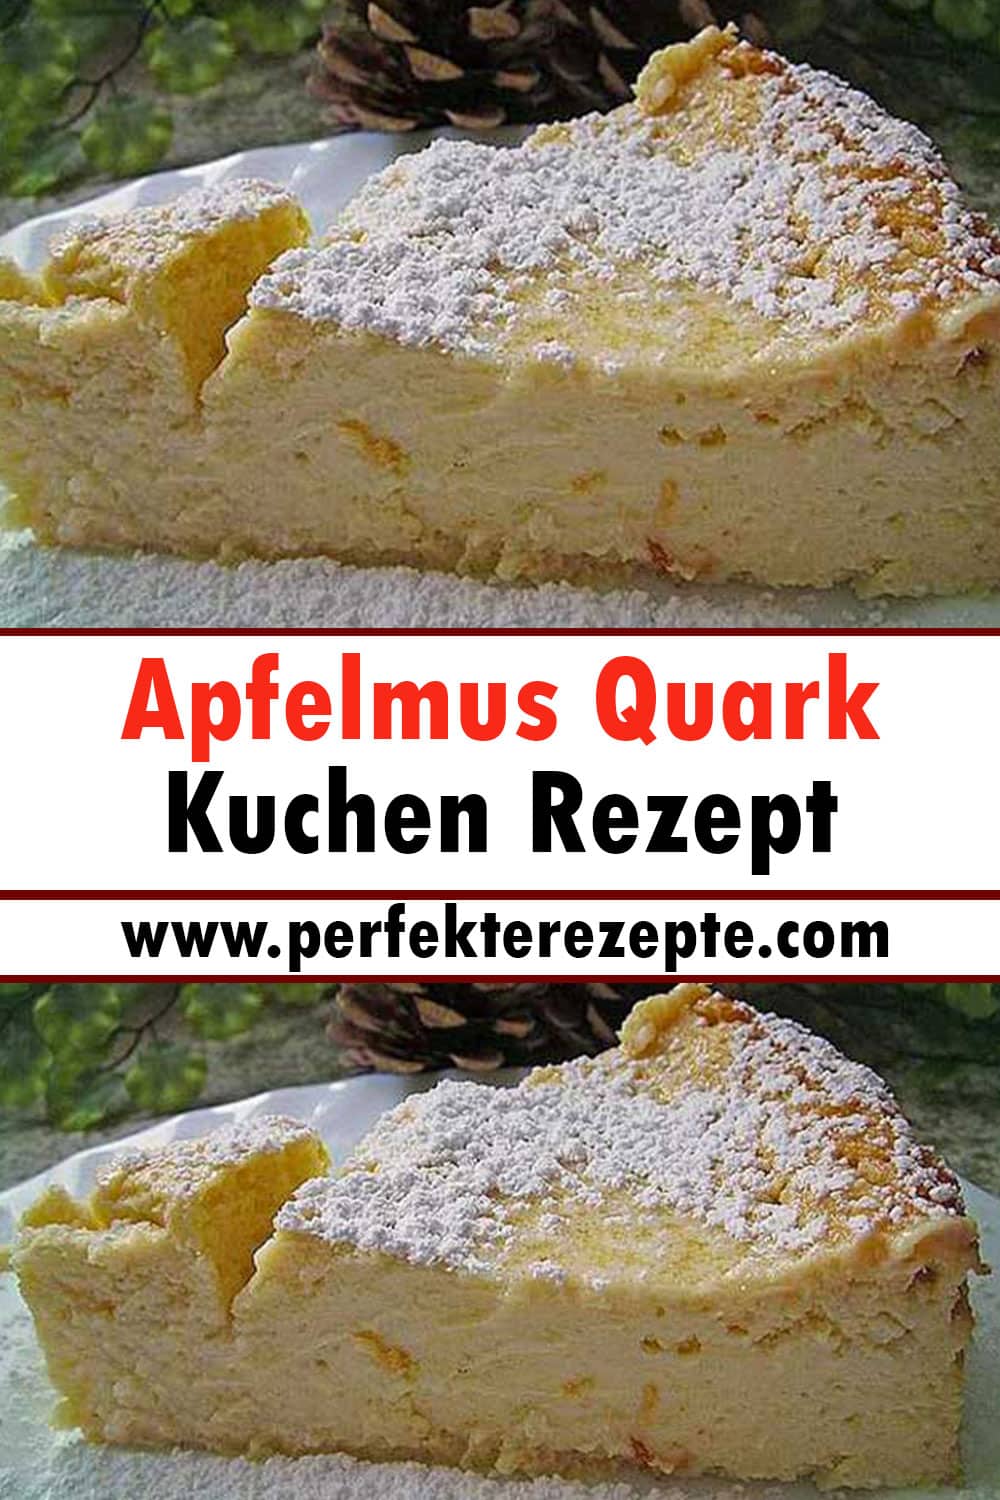 Apfelmus Quark Kuchen Rezept, Richtig Toll Saftig Und Lecker!